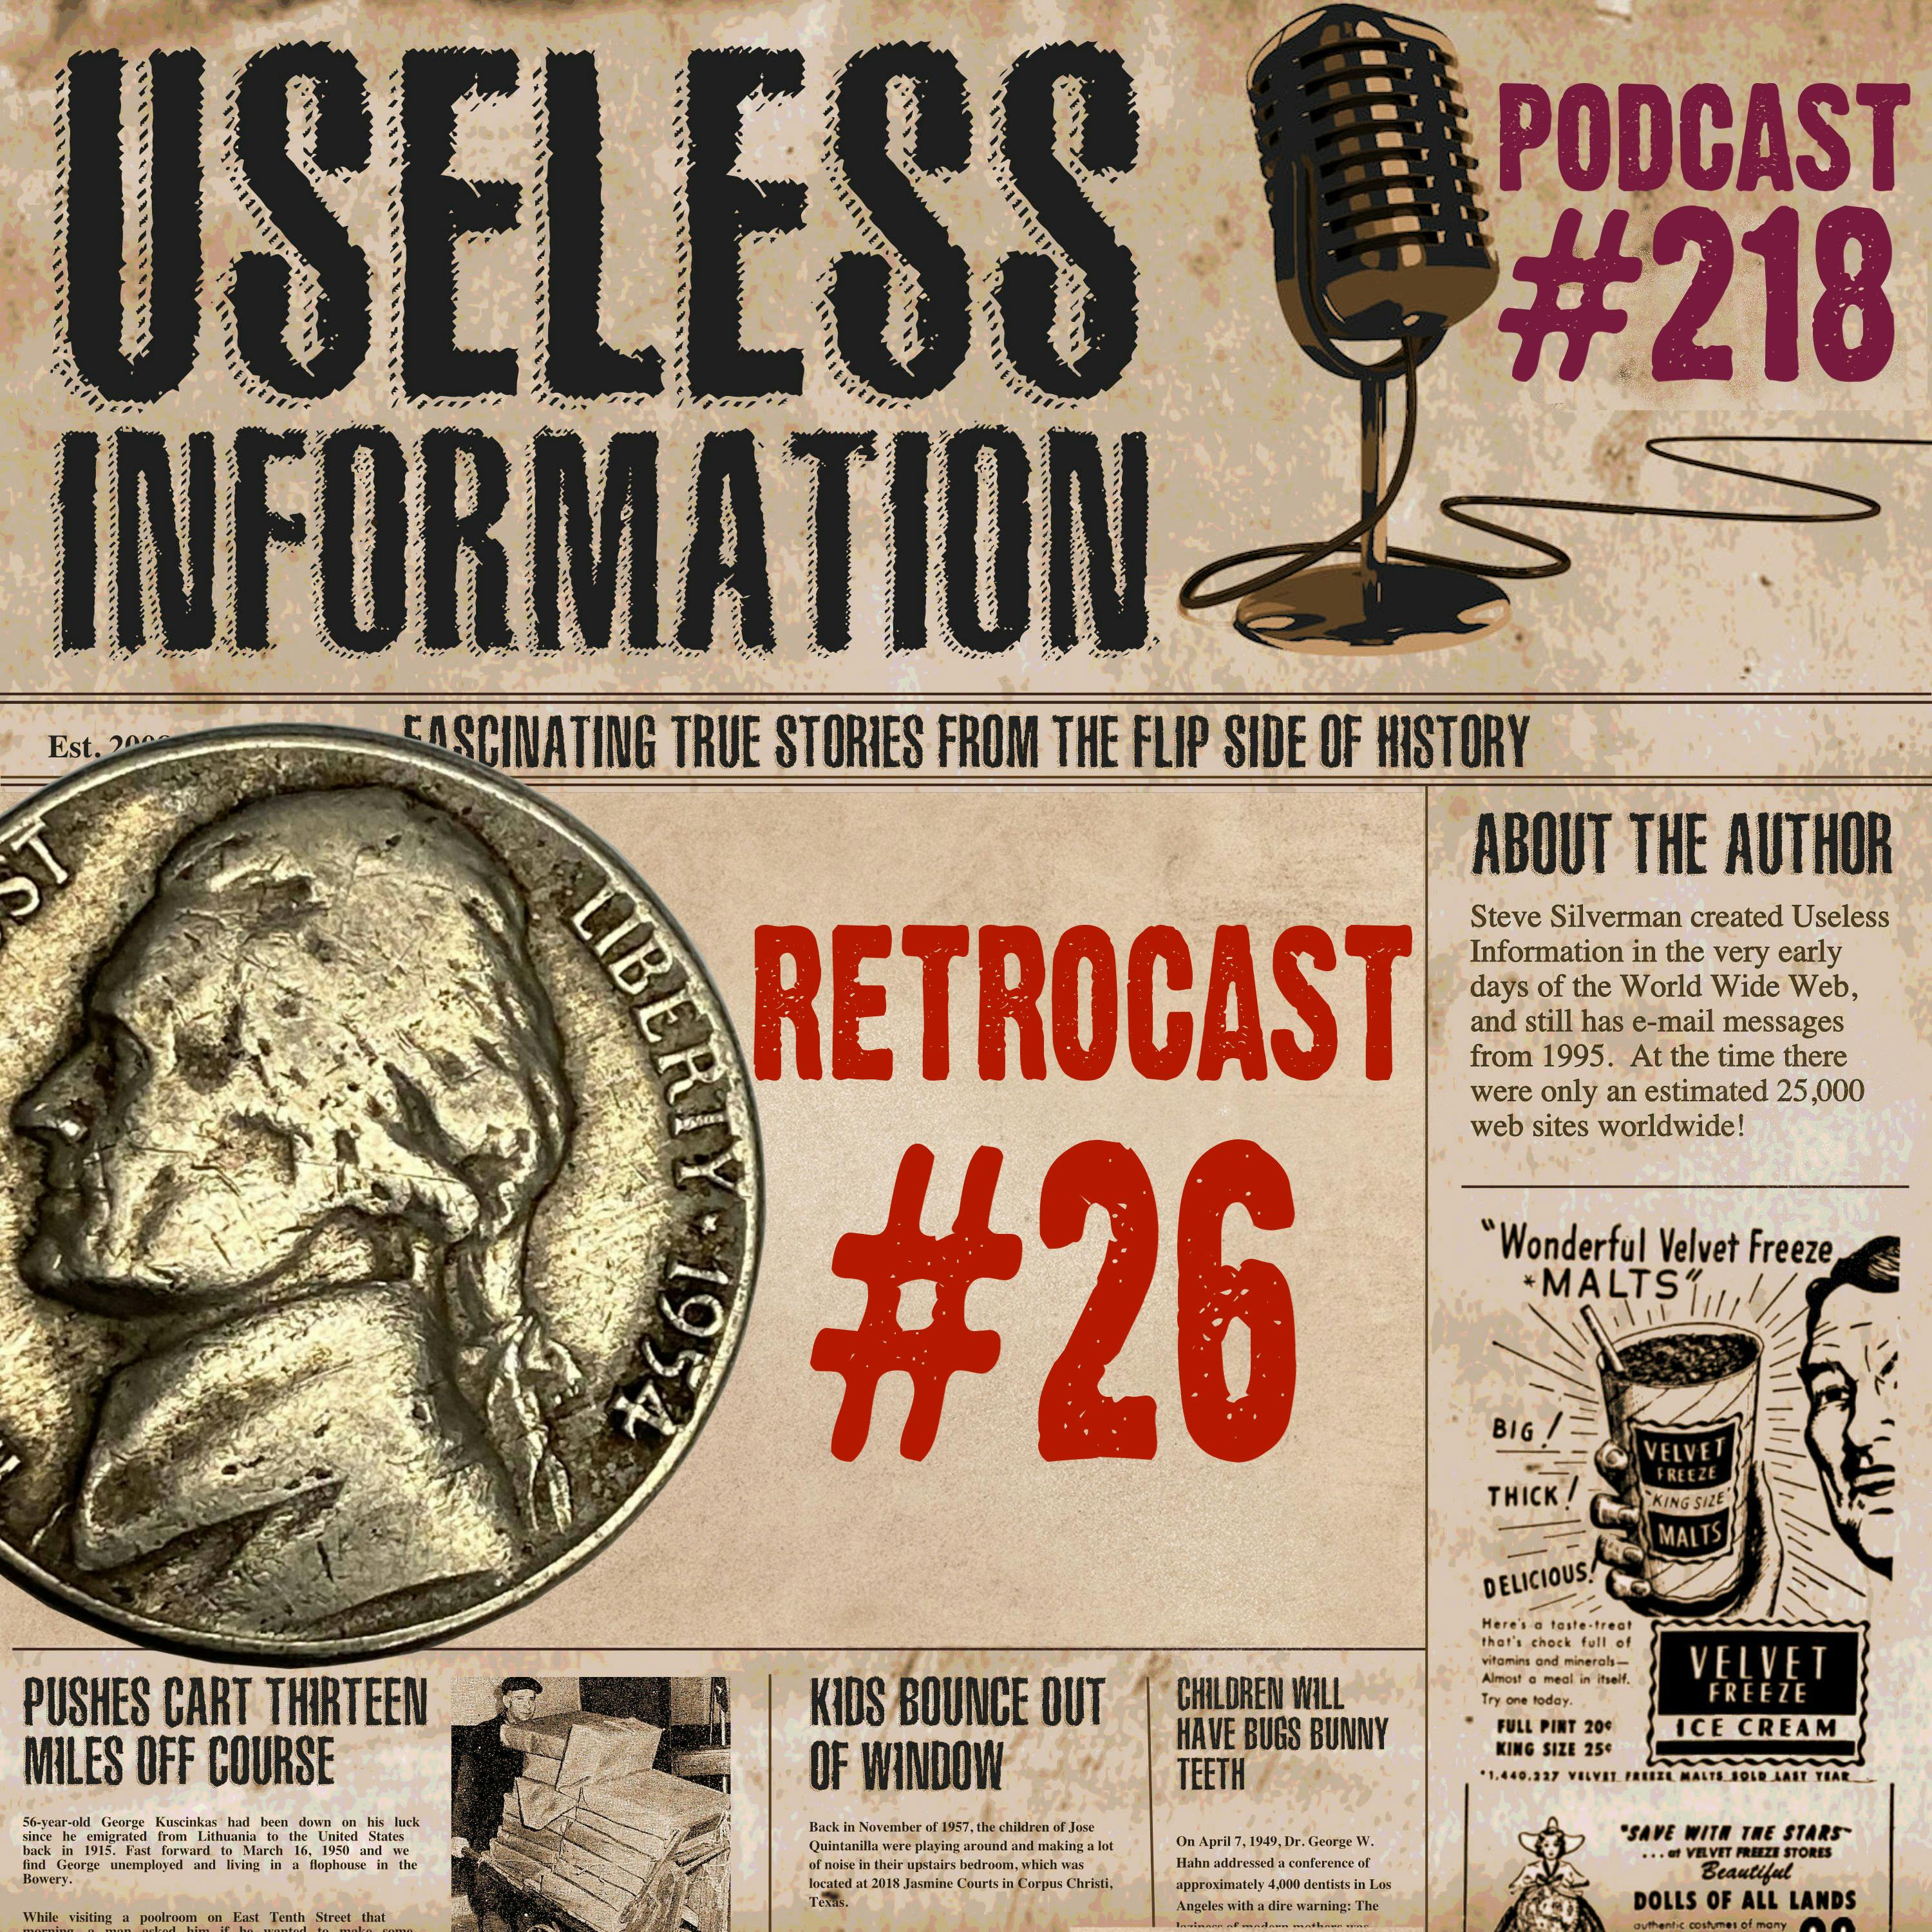 Retrocast #26 - Podcast #218